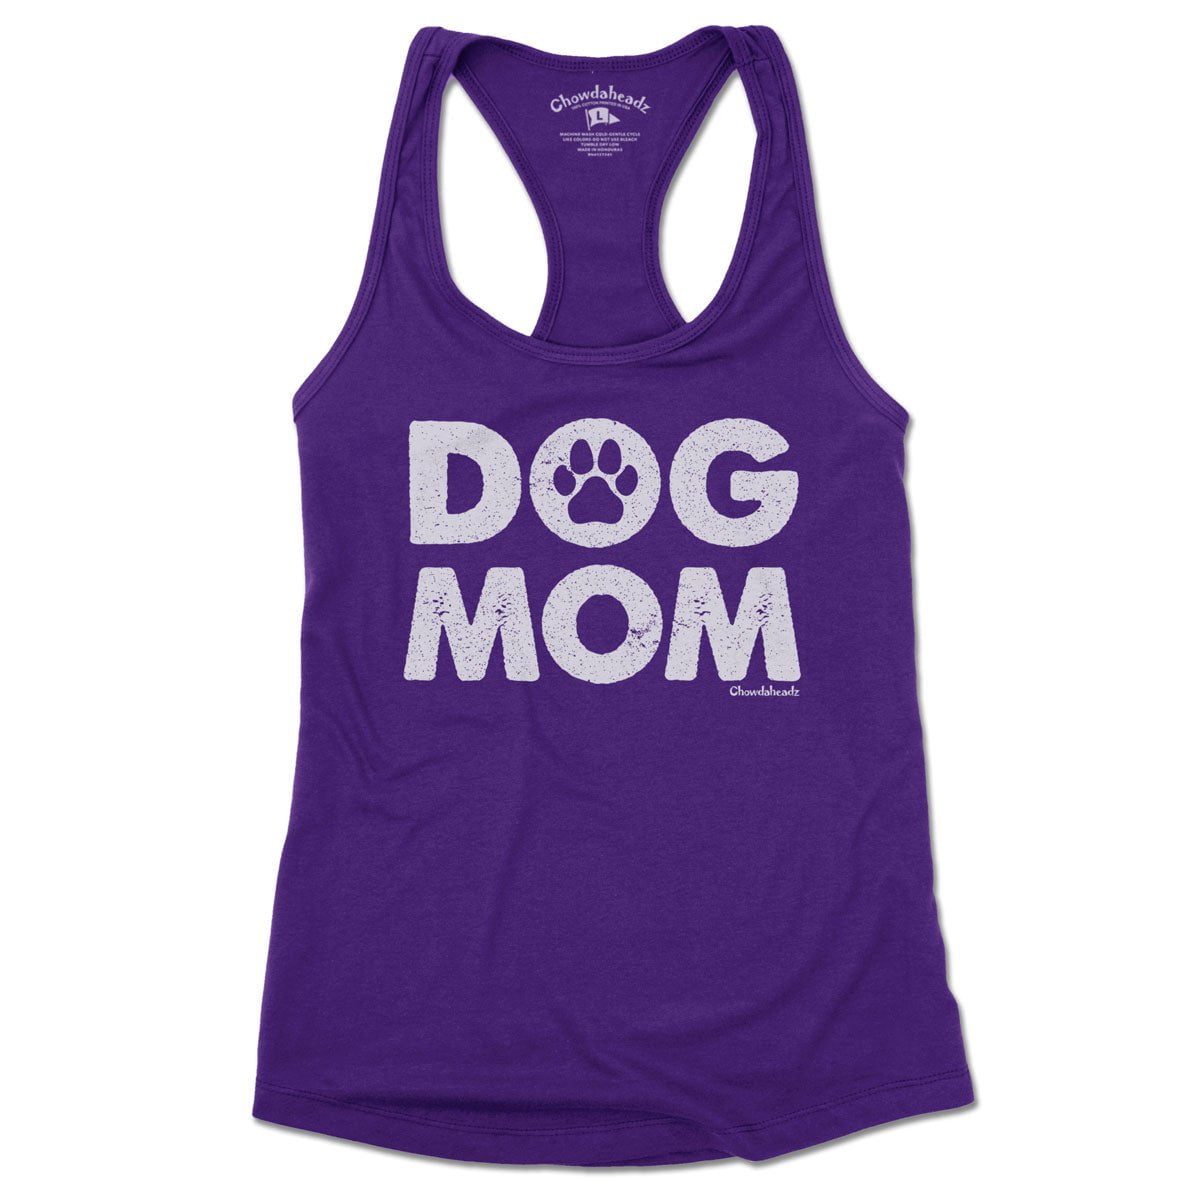 Dog Mom Women's Tank Top (11 Colors) - Chowdaheadz